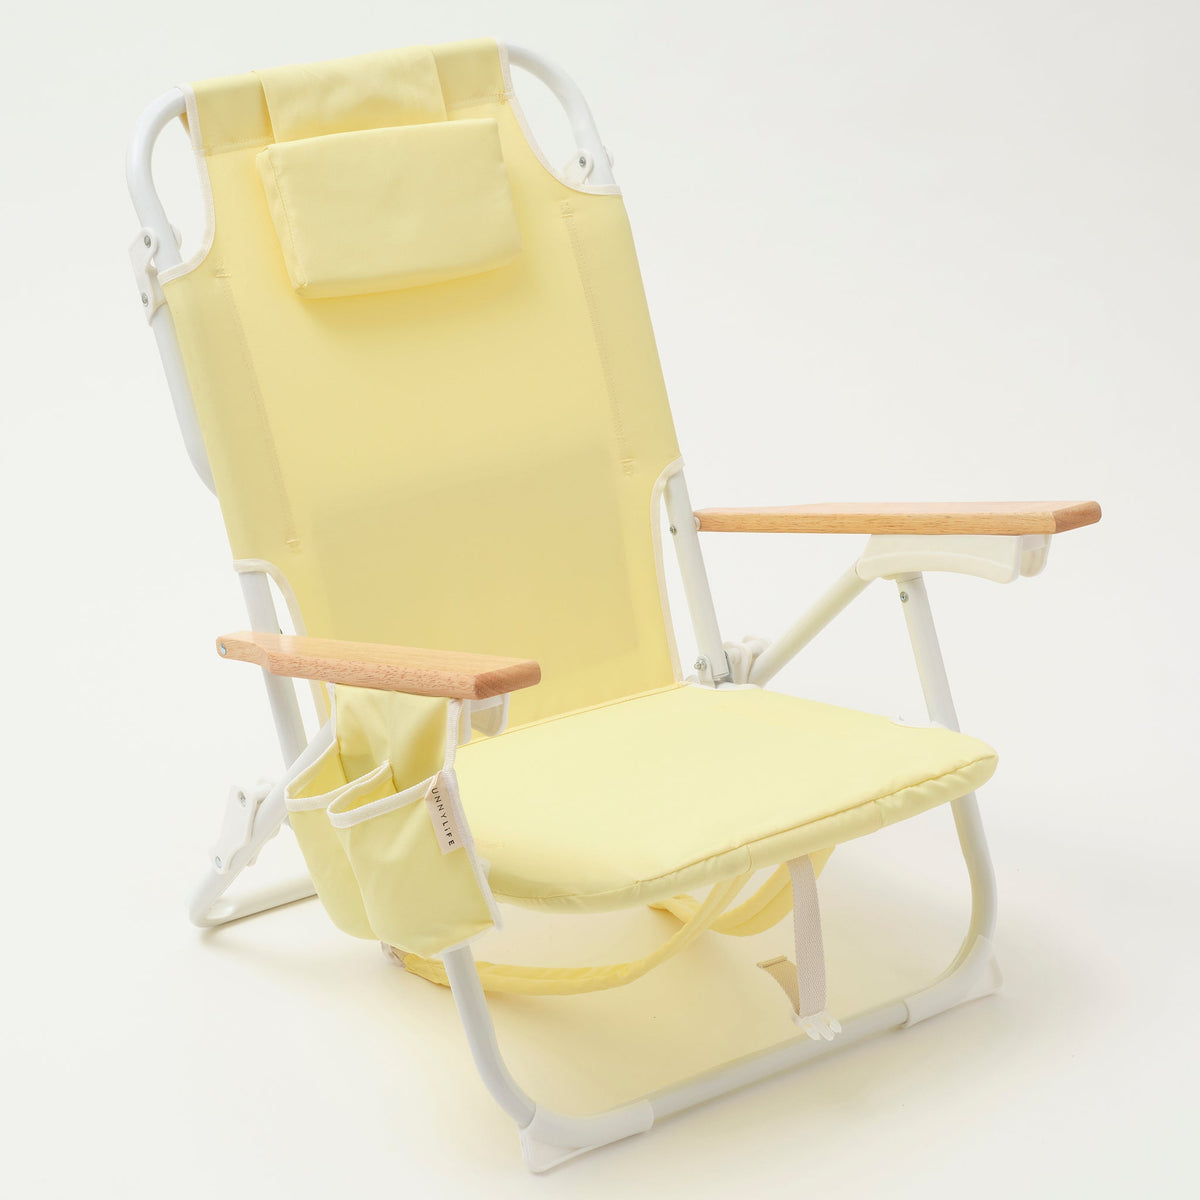 SunnyLife Deluxe Beach Chair - Utopia Pale Banana